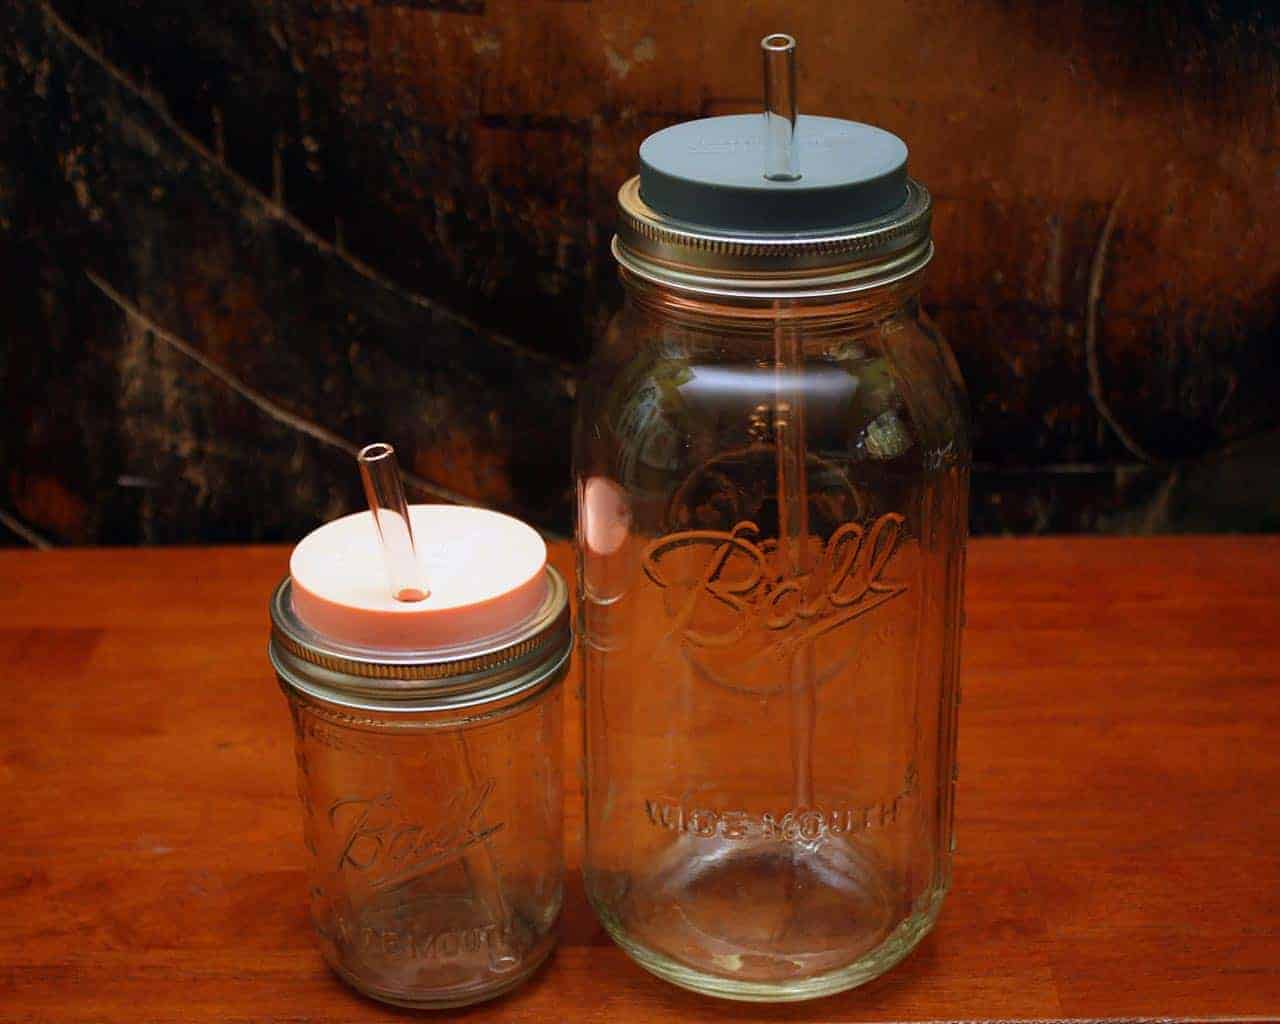 Extra long thick glass straw in half gallon 64oz Mason jar and medium glass straw in pint 16oz Mason jar